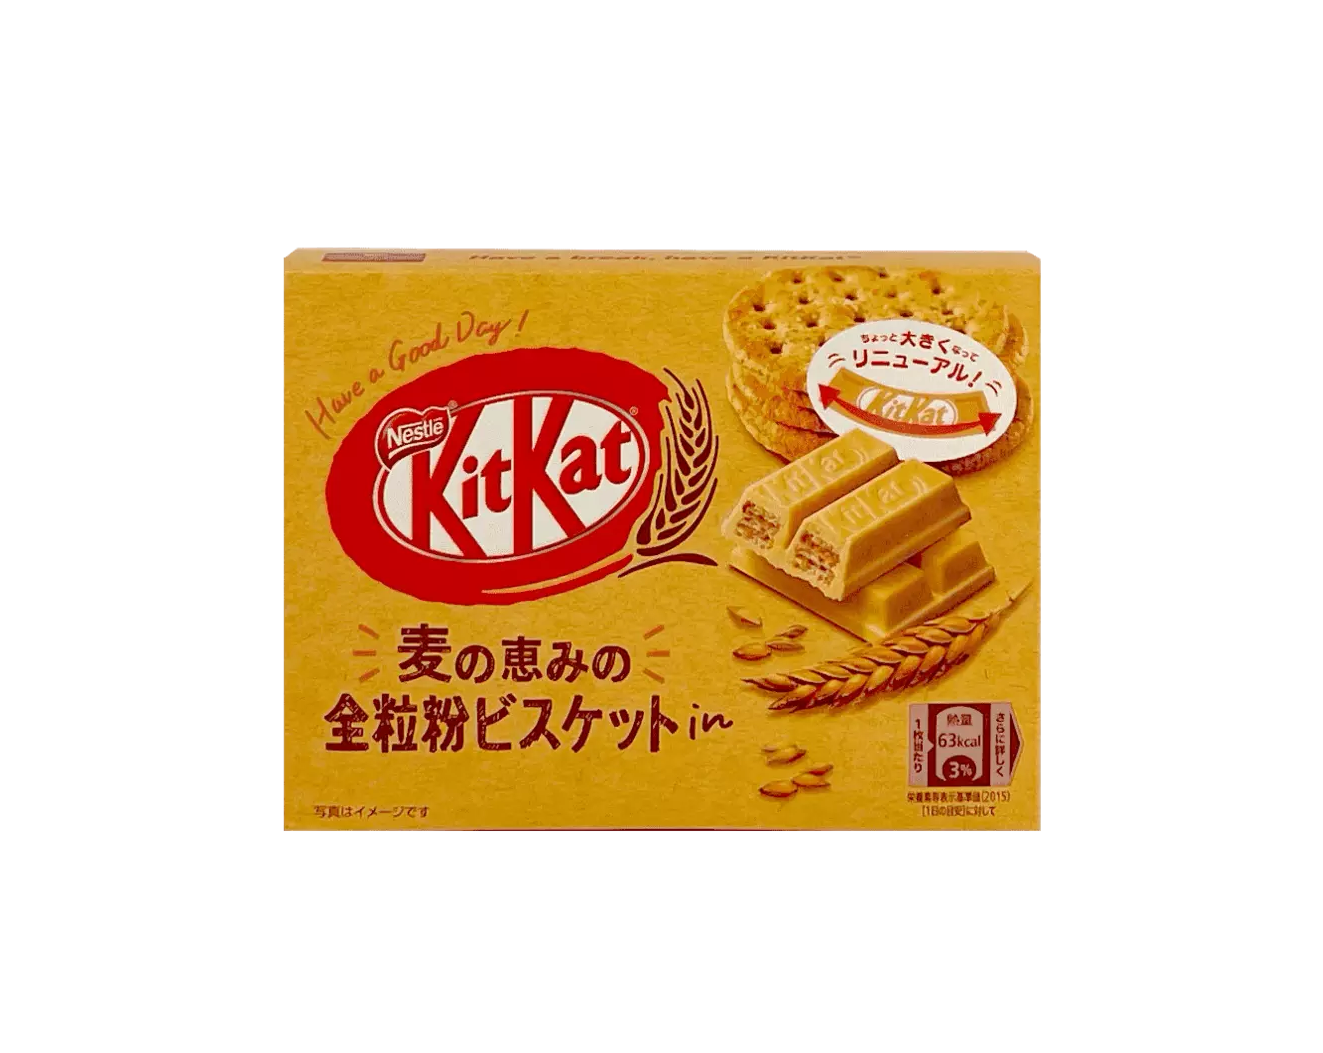 Kitkat 迷你盒 全麦饼干  日本